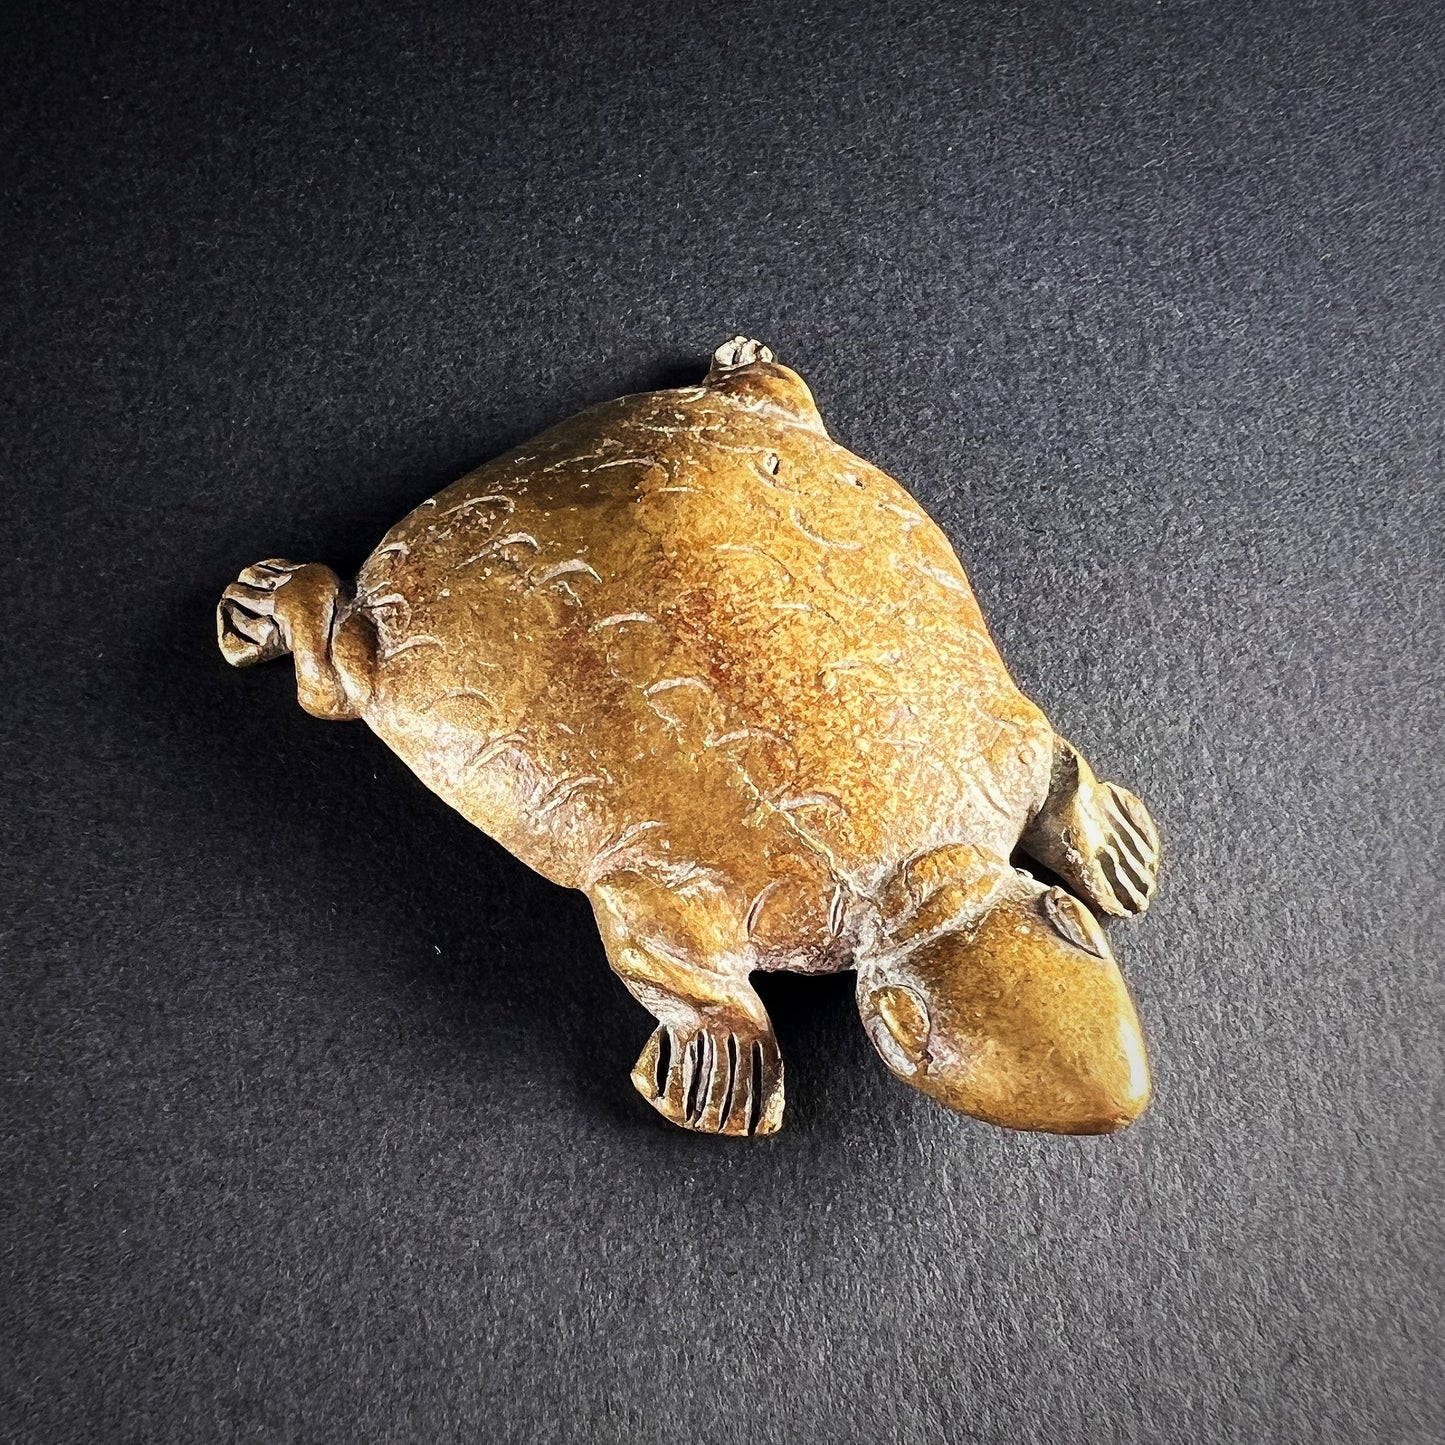 Asanti gold weight - turtle.